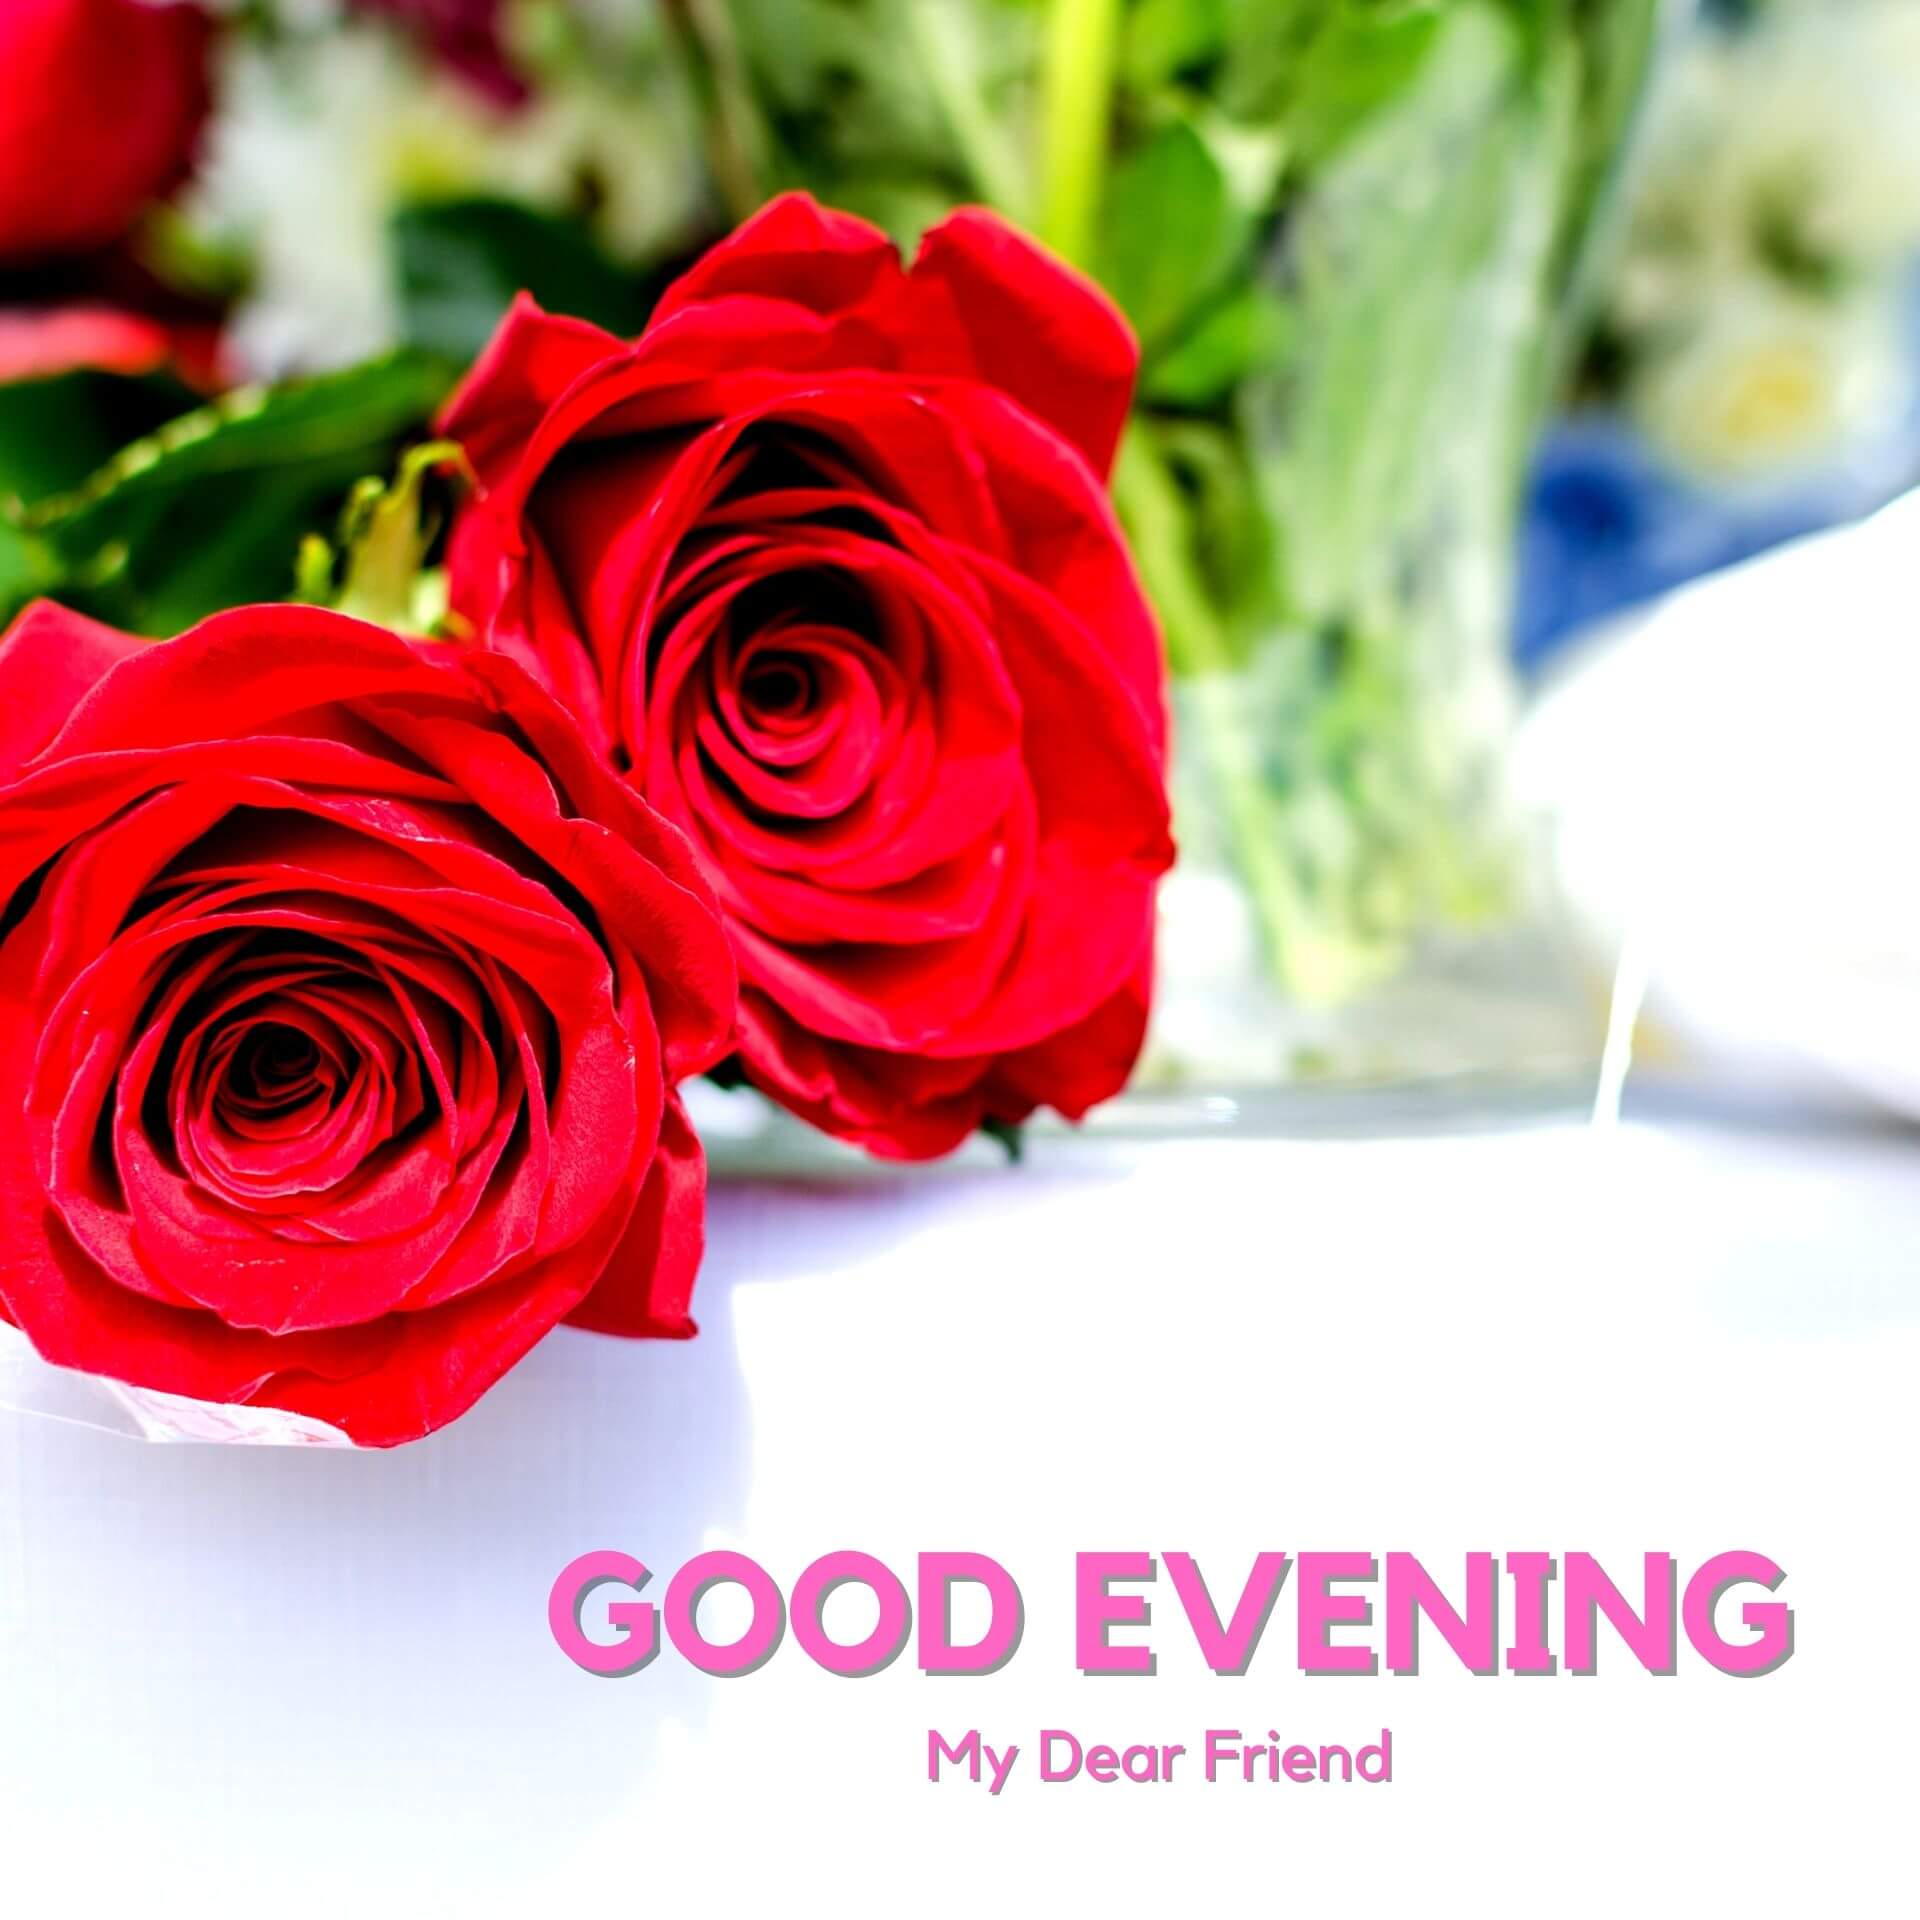 Romantic Good Evening Wallpaper Pics With Rose